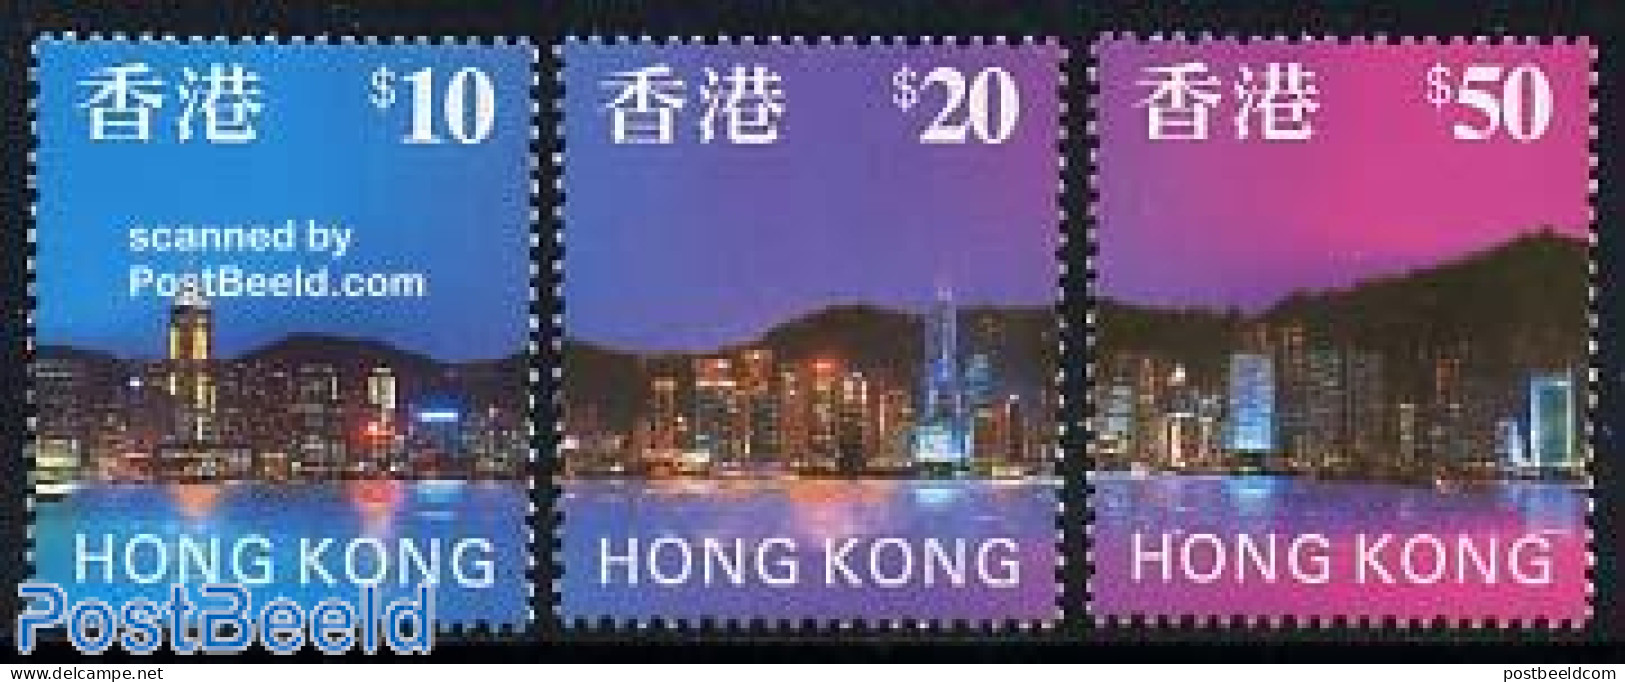 Hong Kong 1997 Definitives 3v, Mint NH - Neufs